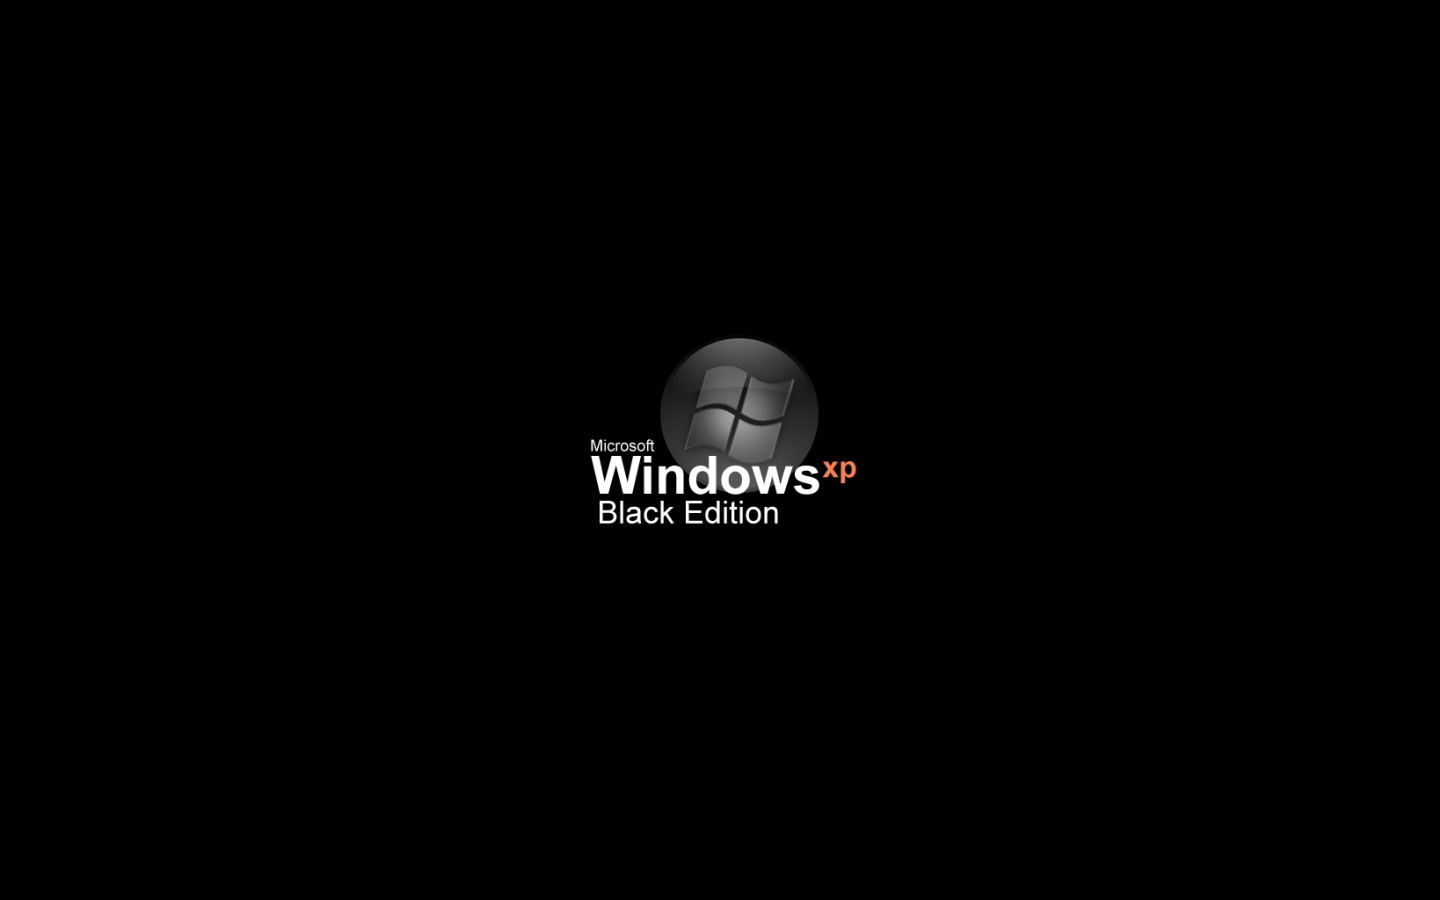 windows xp black edition wallpaper